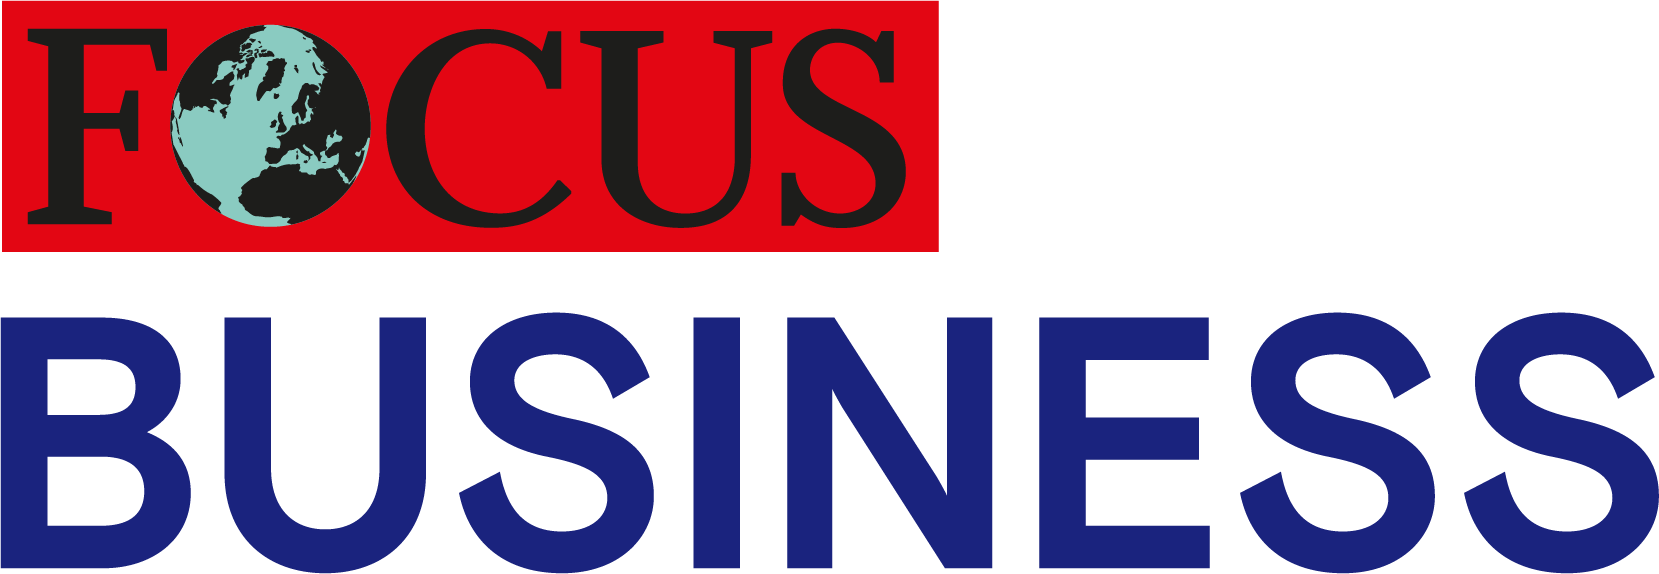 FOCUS-Business Logo